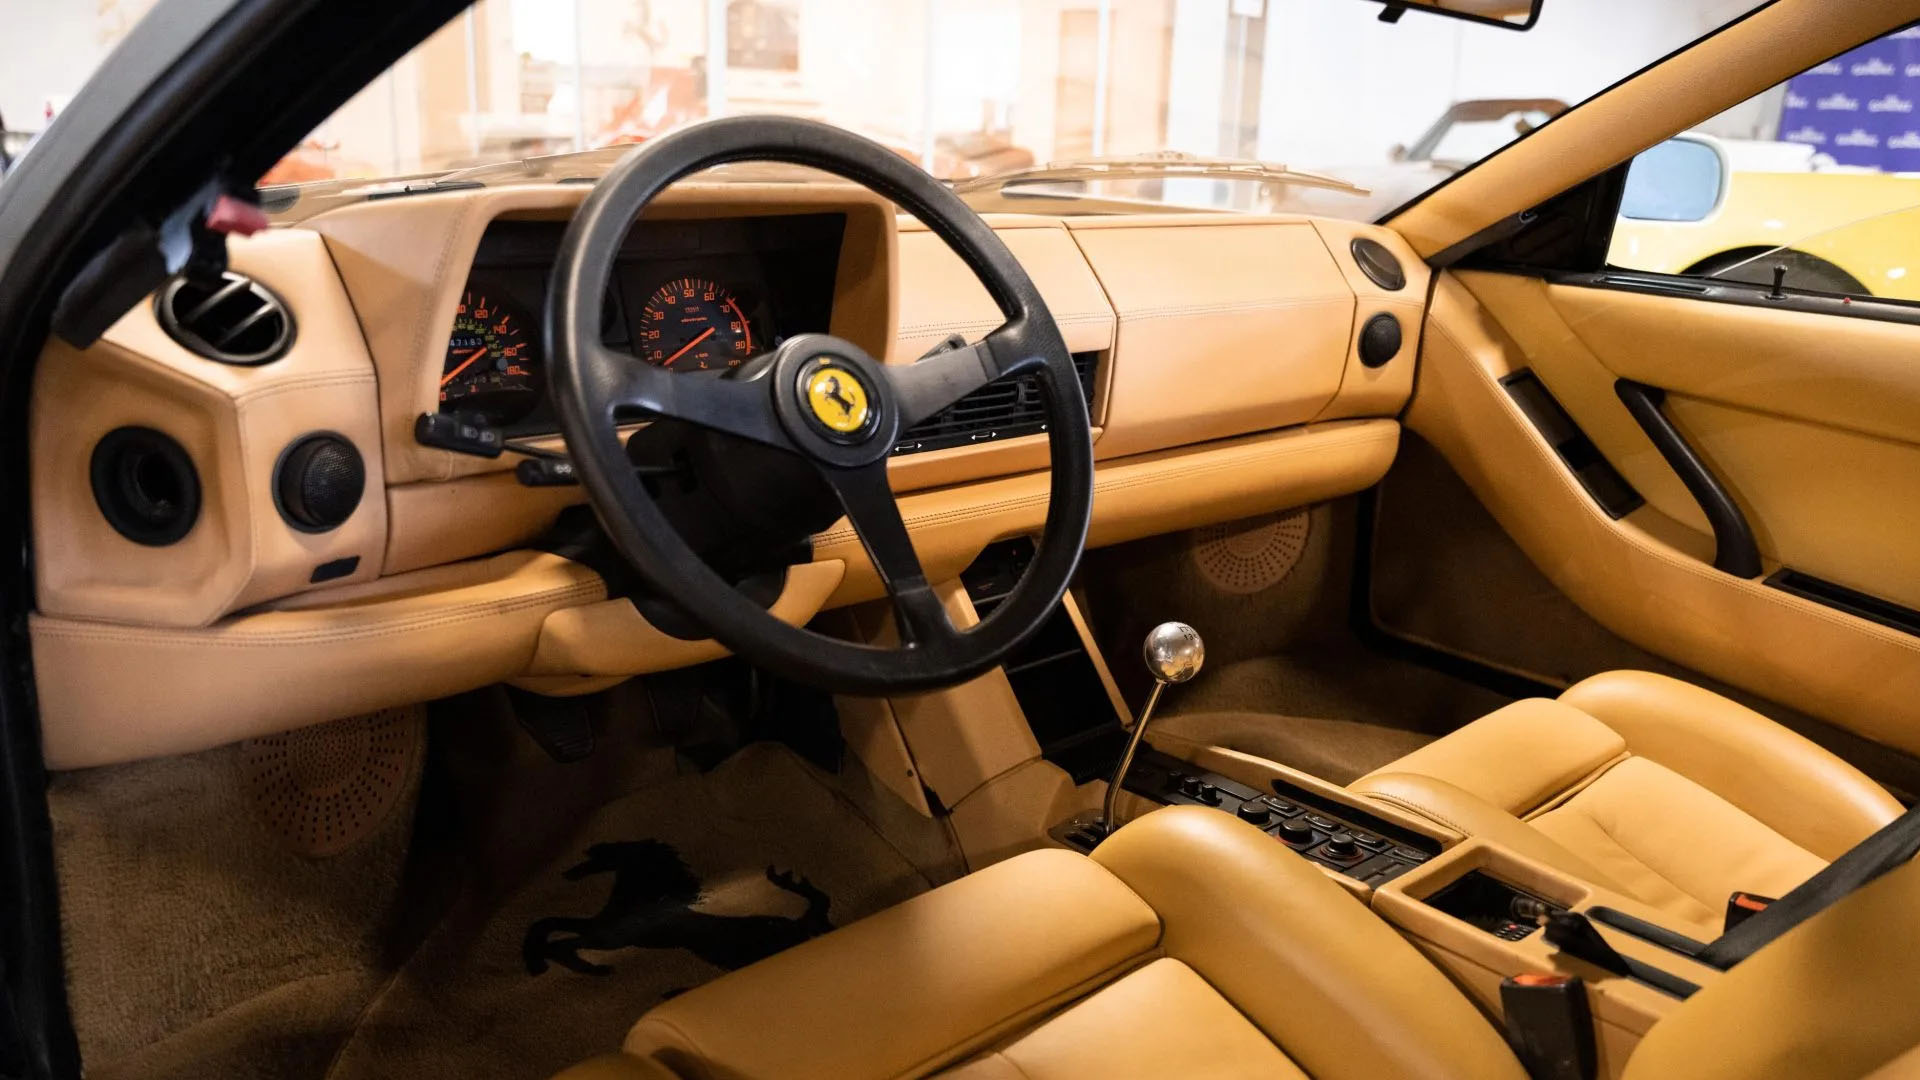 Ferrari Testarossa interior - Cockpit